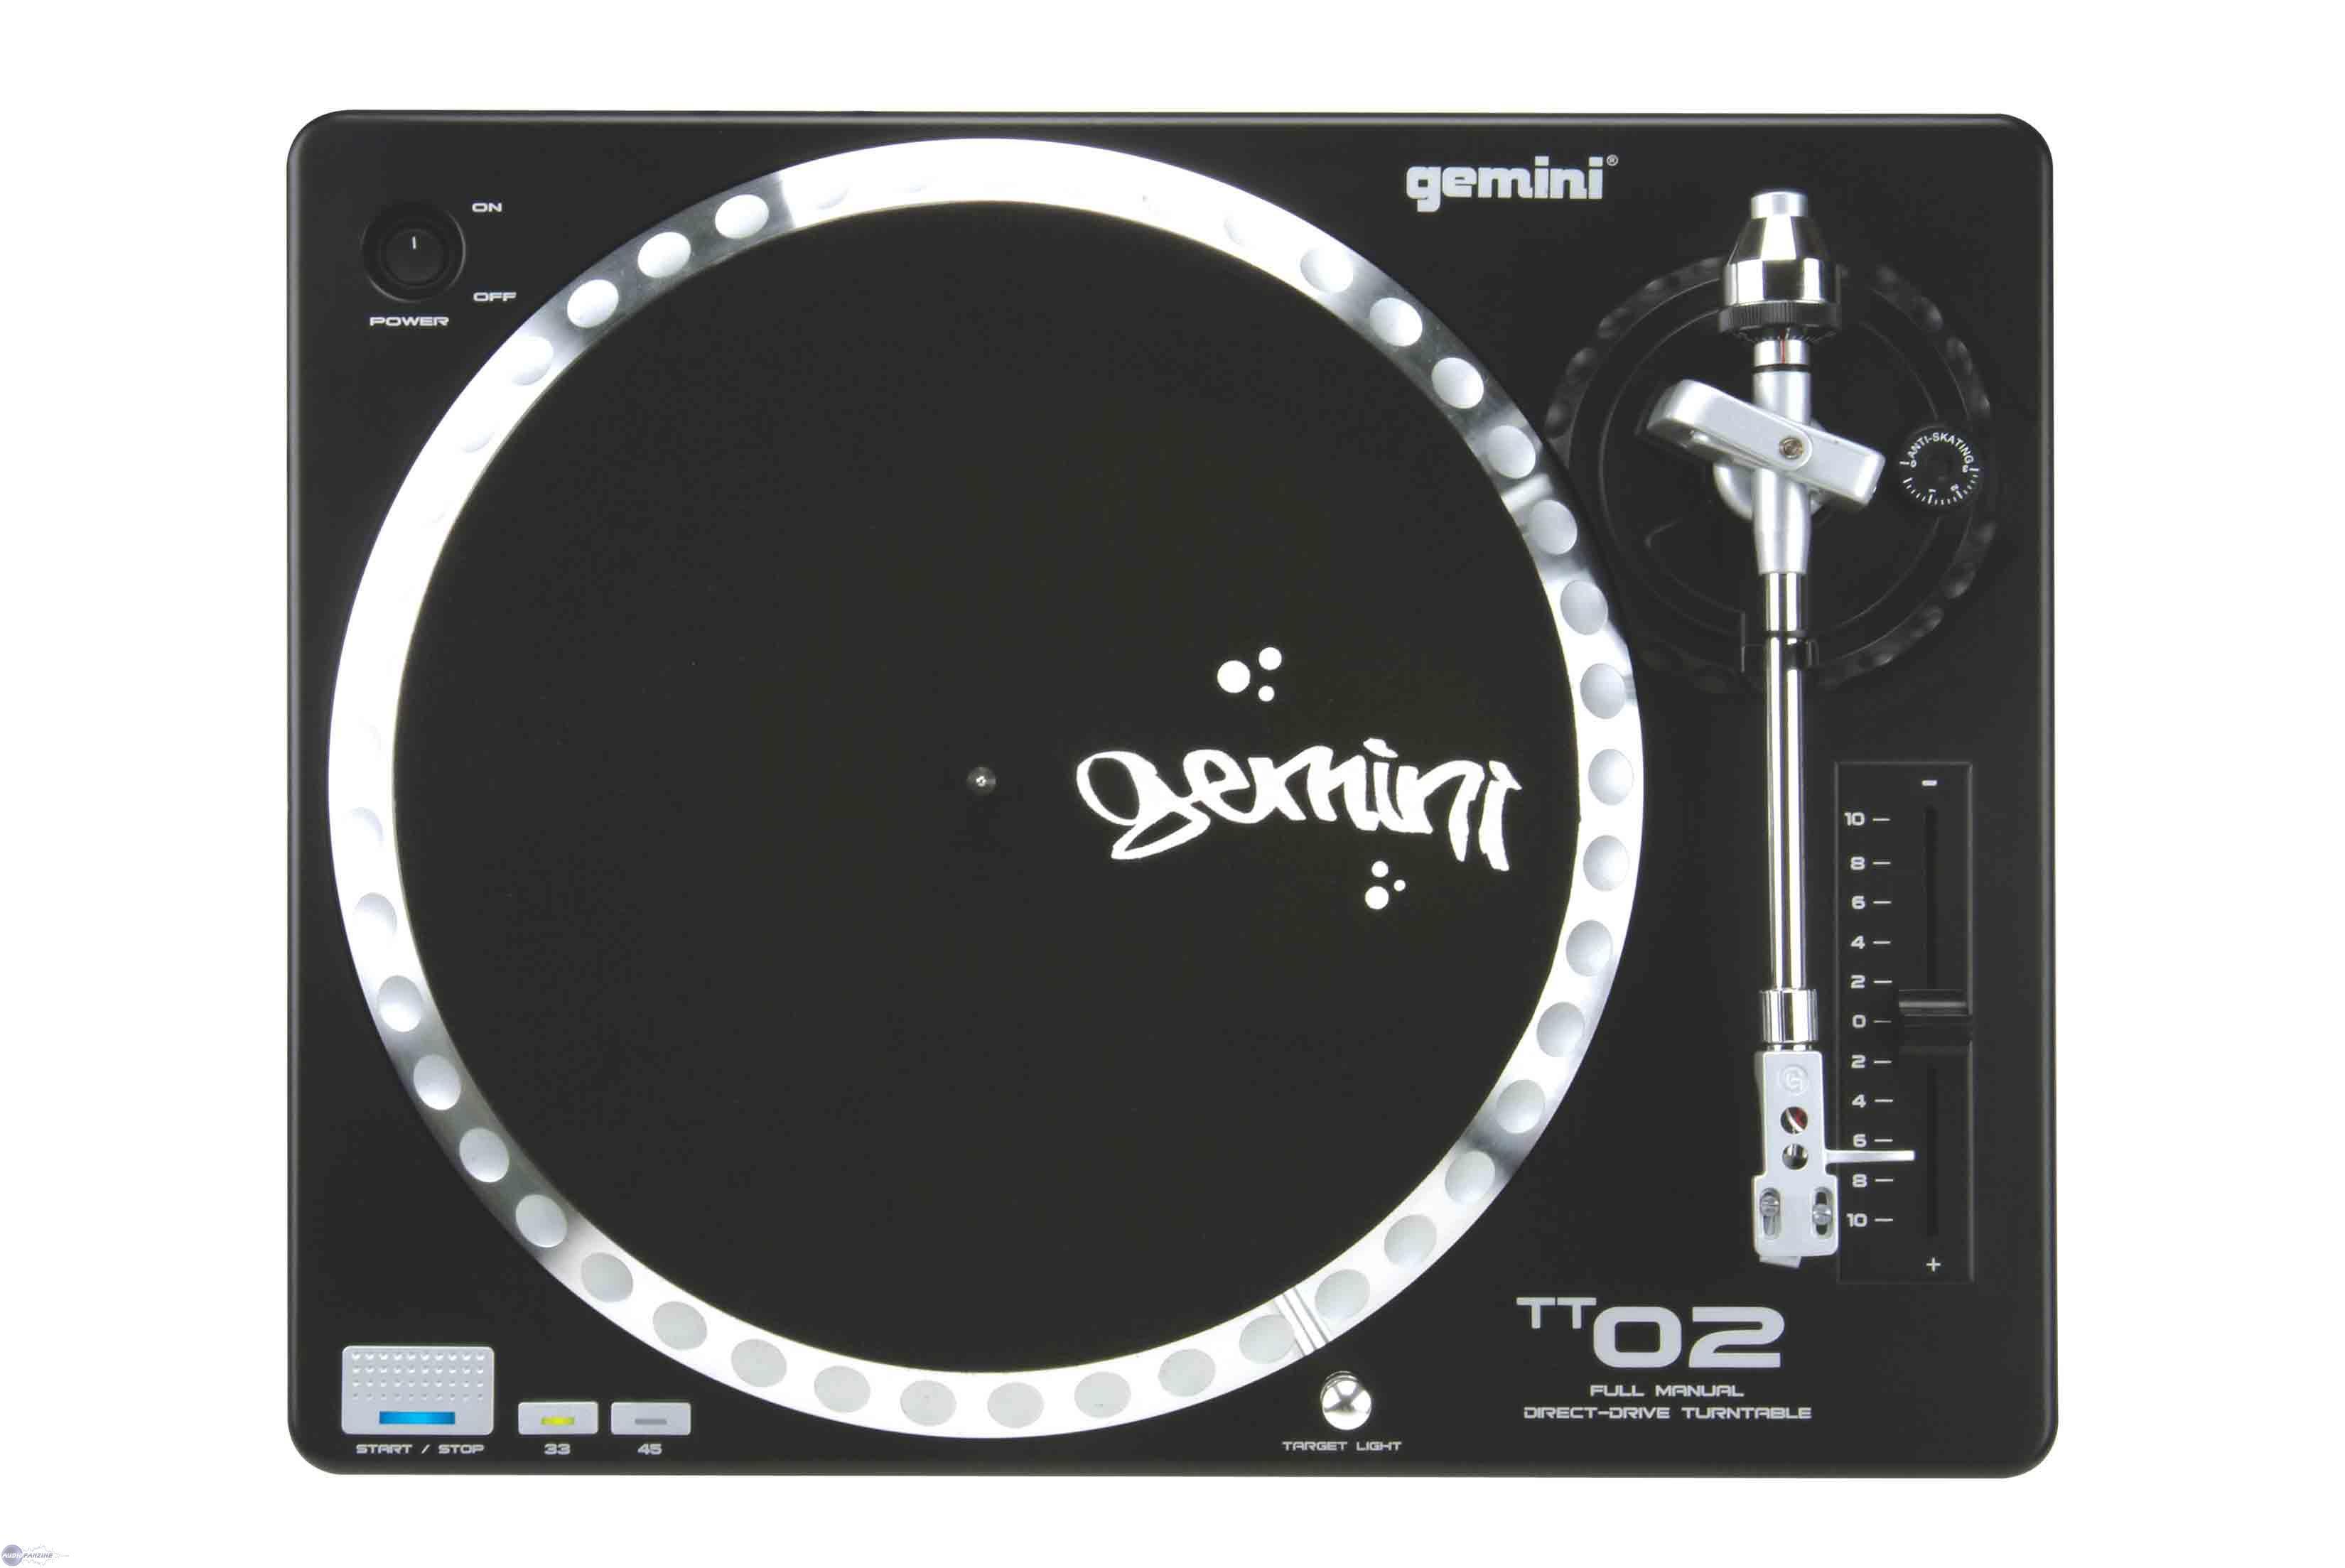 Test Pioneer DJ PLX-500, platine vinyle pour DJ - Audiofanzine